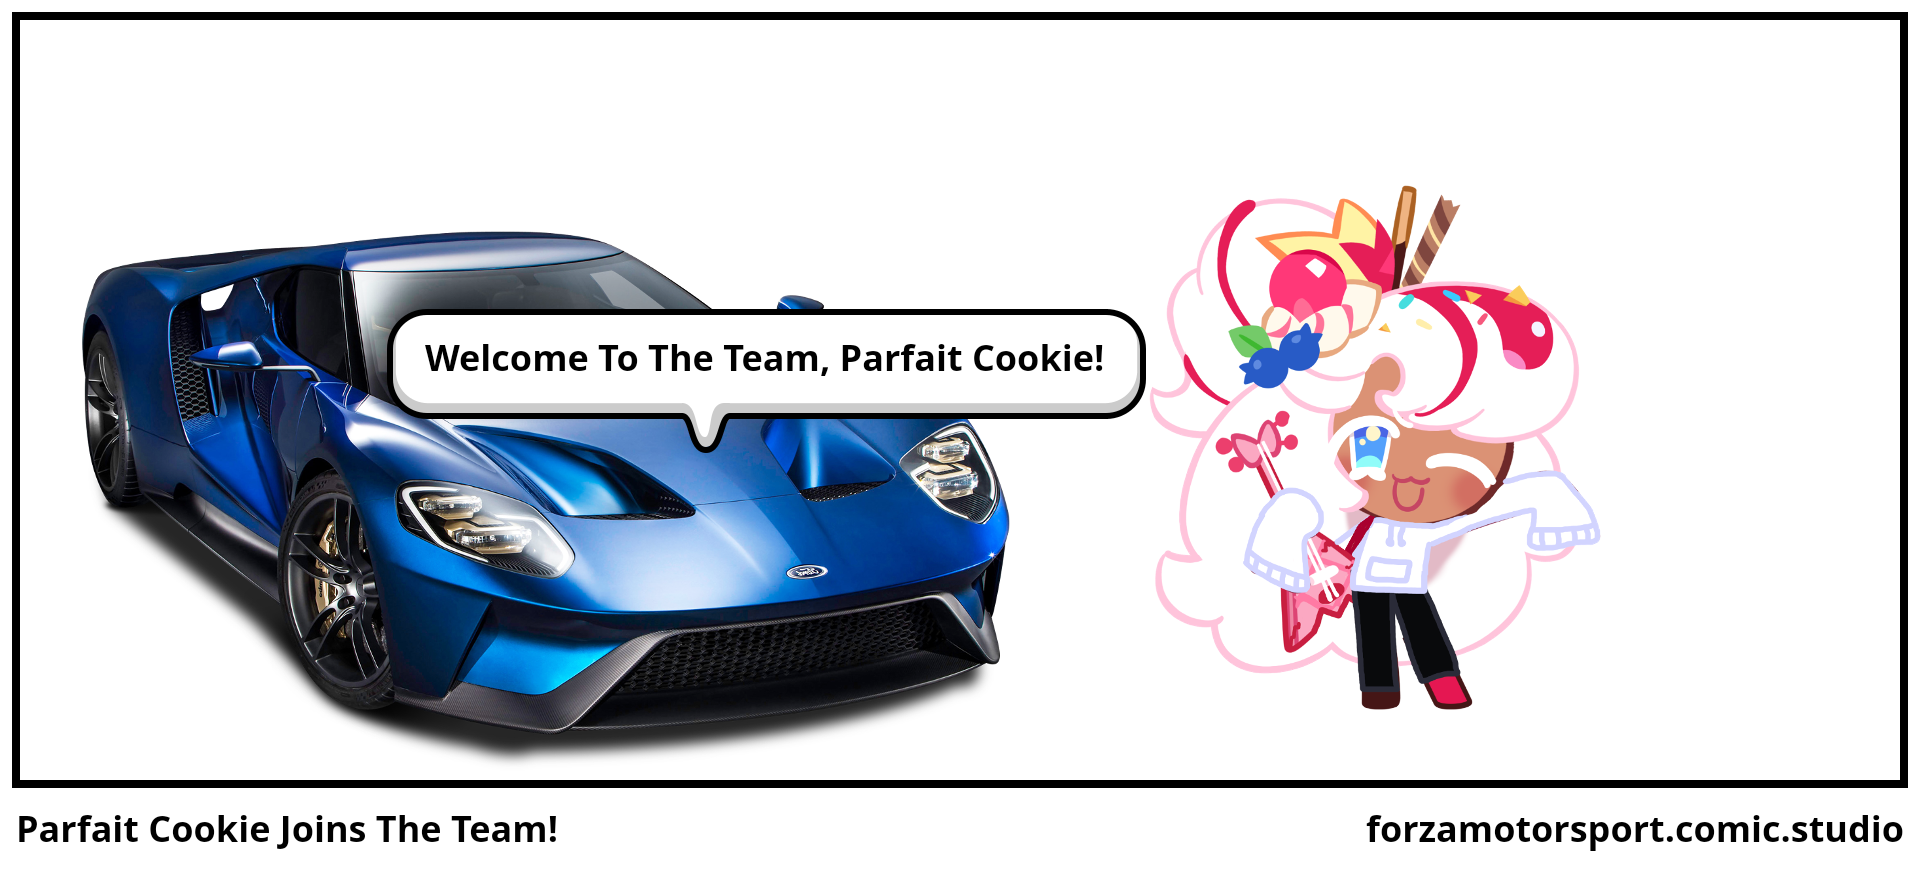 Parfait Cookie Joins The Team!